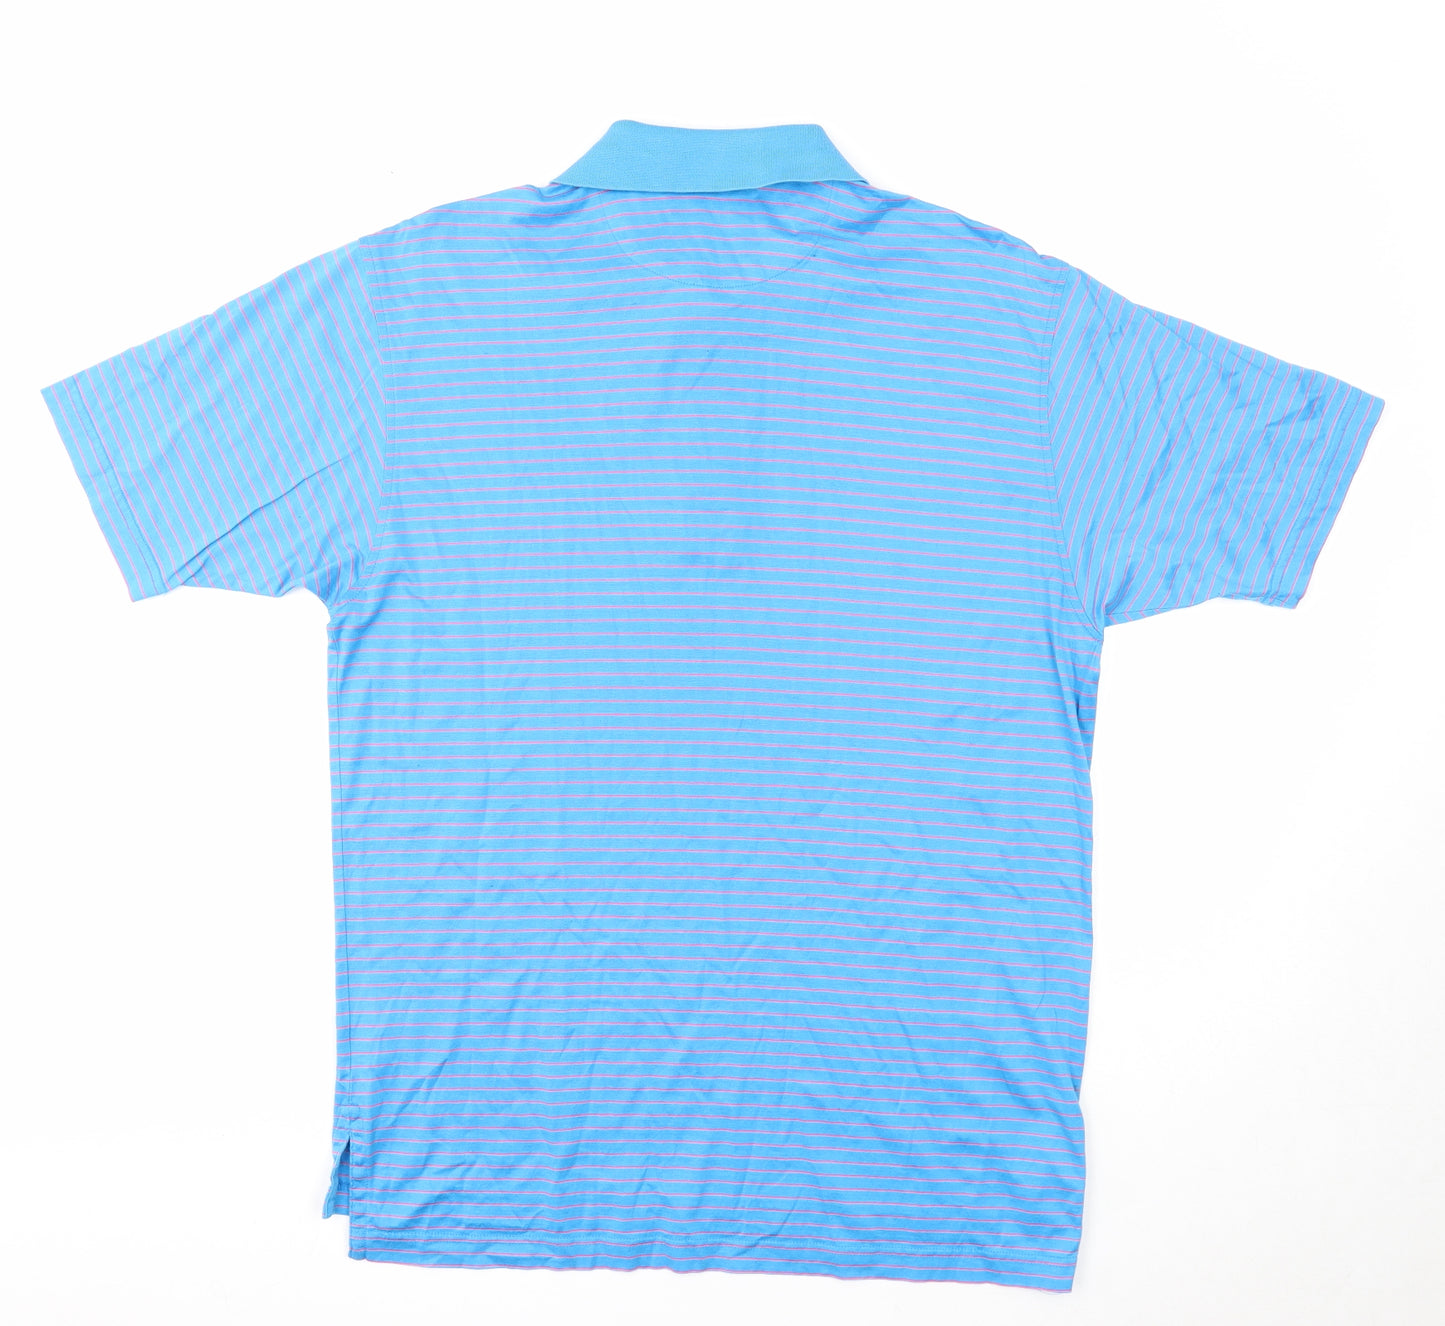 Bobby Jones Mens Blue Striped Cotton Polo Size S Collared Button